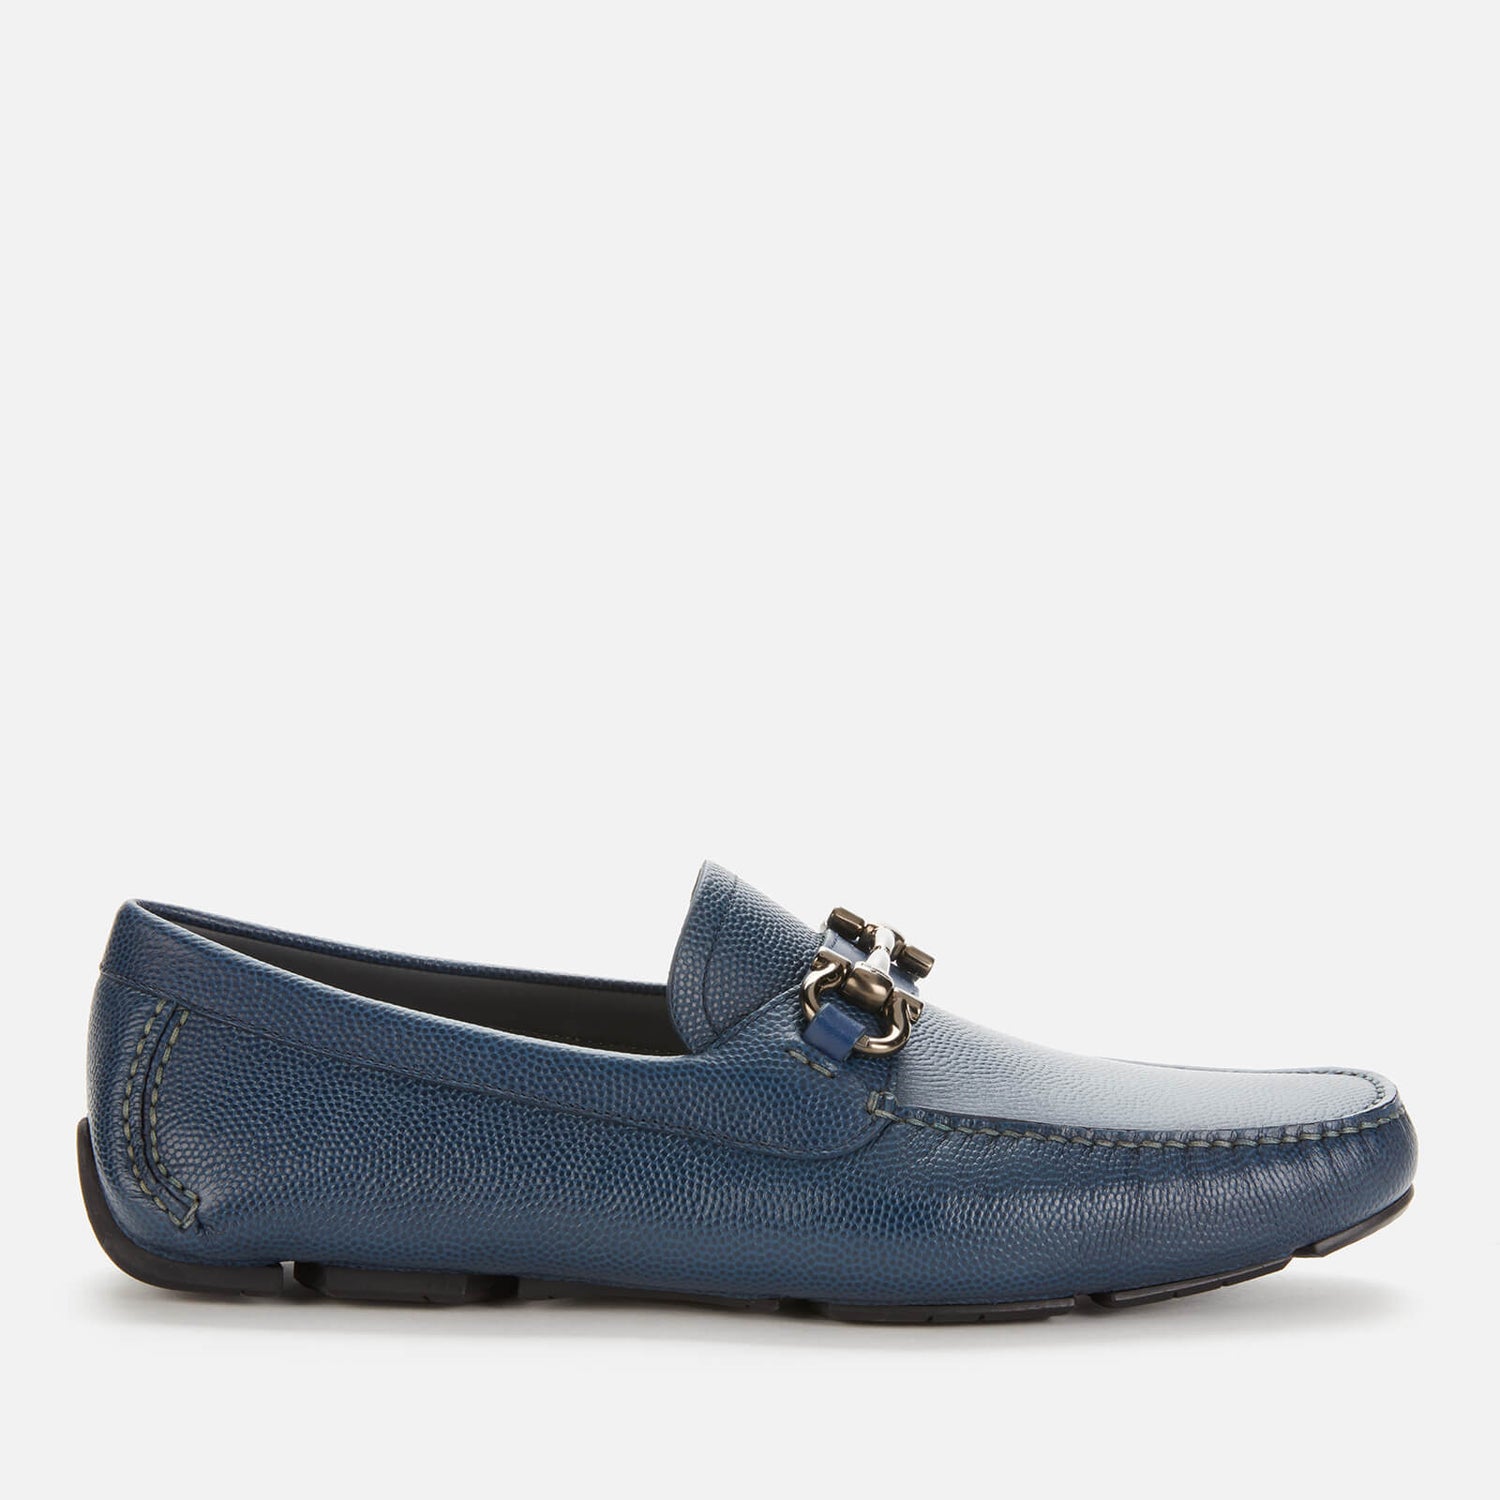 Salvatore Ferragamo Men's Parigi Leather Driving Shoes - Blue - UK 6